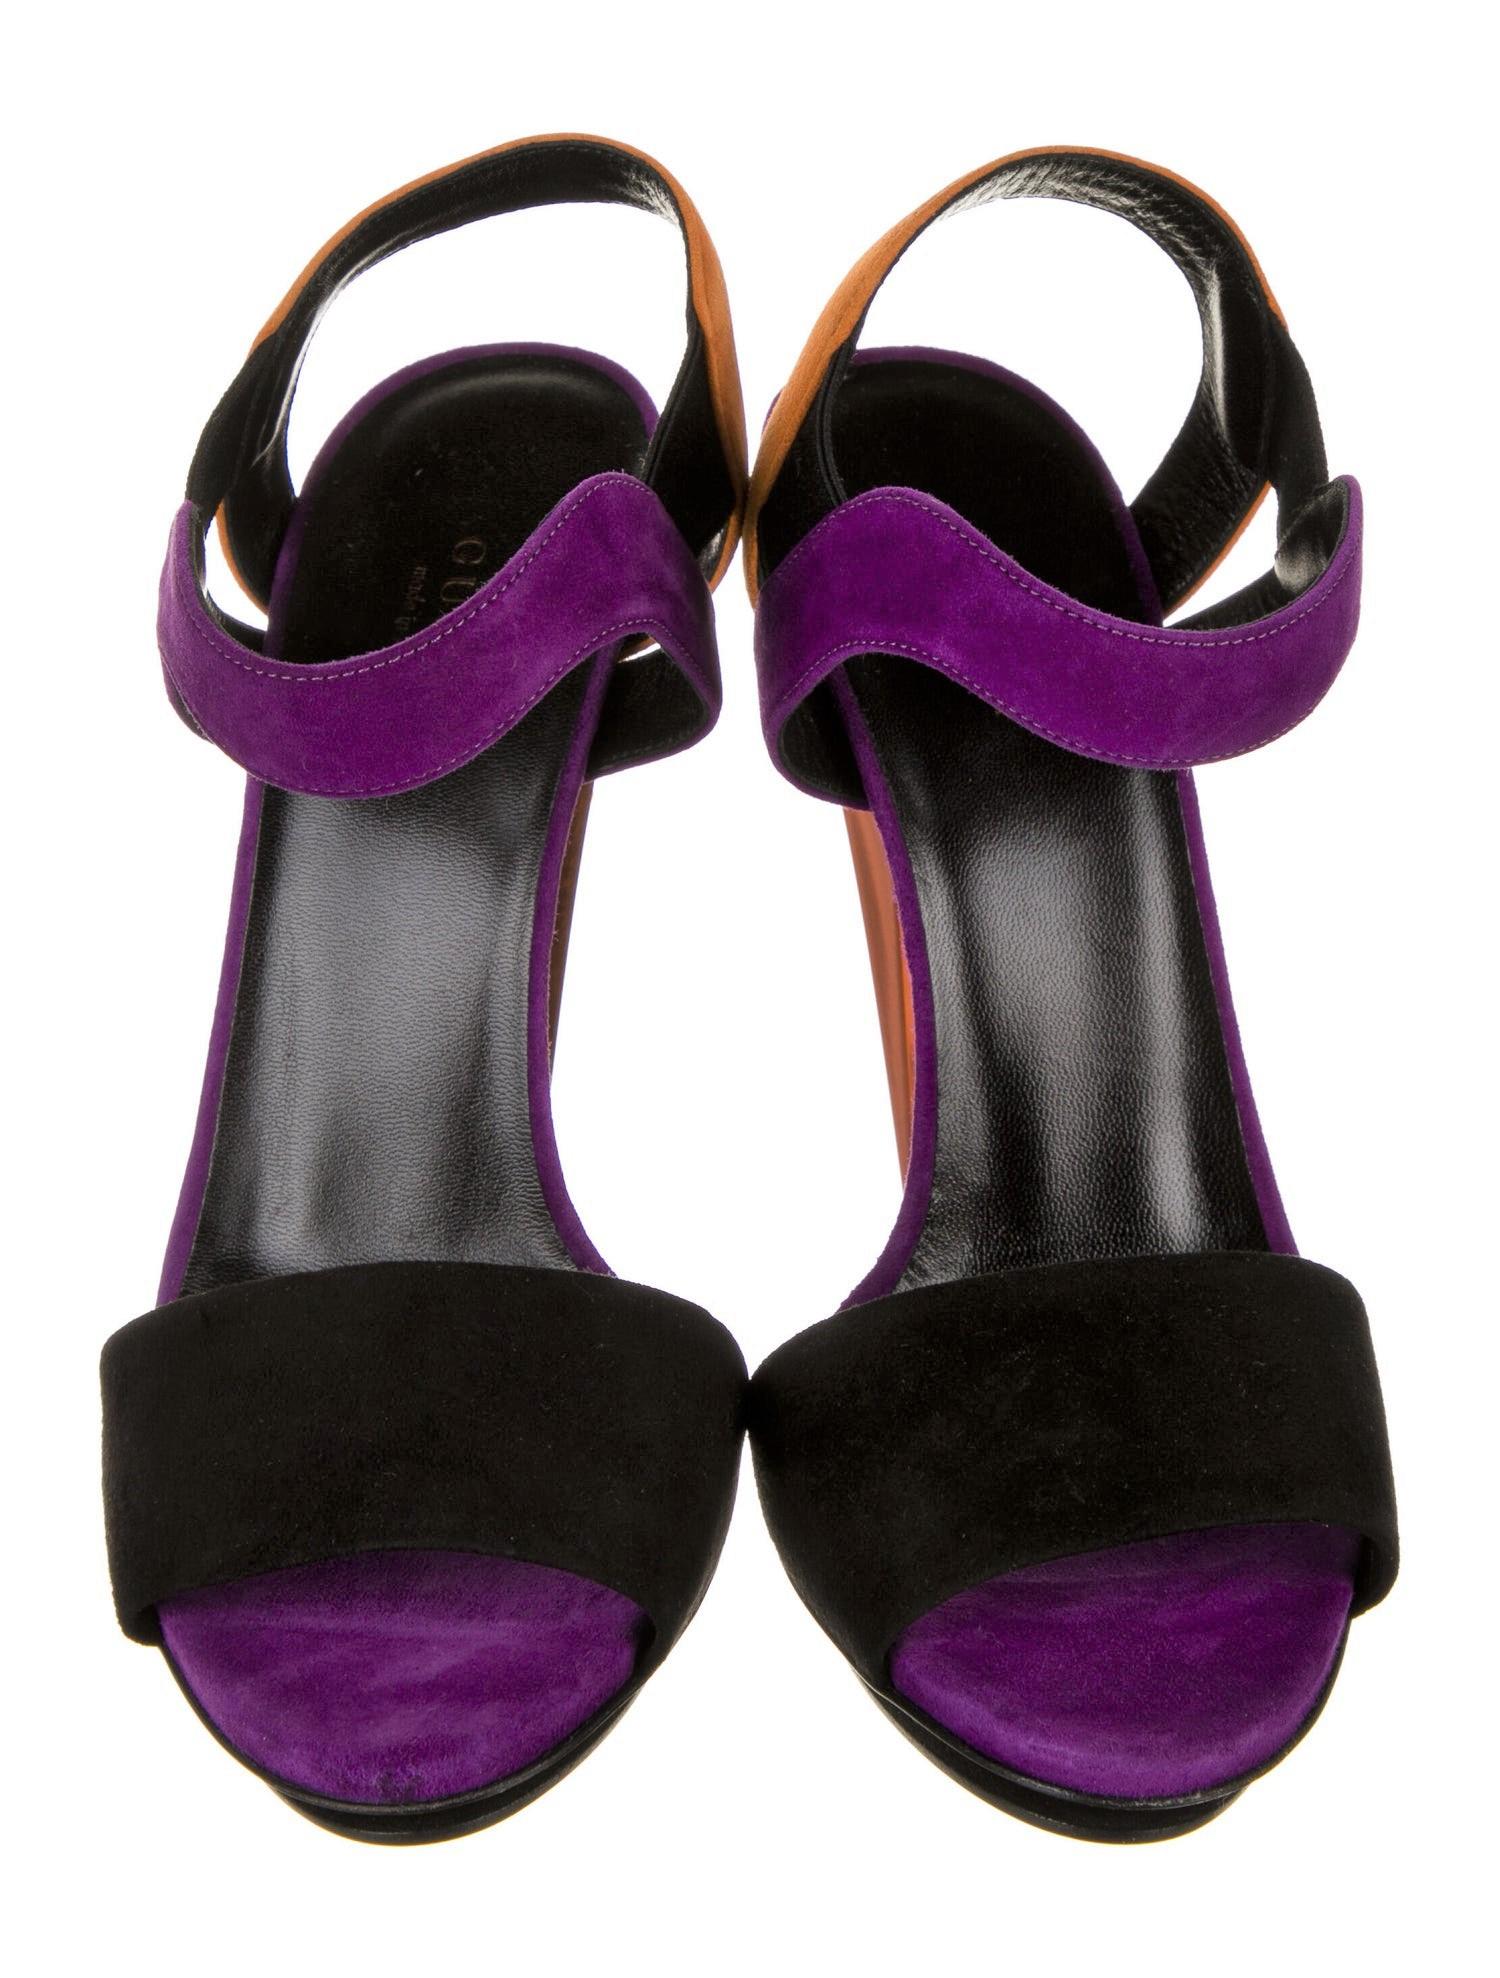 New Gucci Ad Runway 2014 Purple Orange Suede Mirrored Pump Heels Sz 37.5 For Sale 3